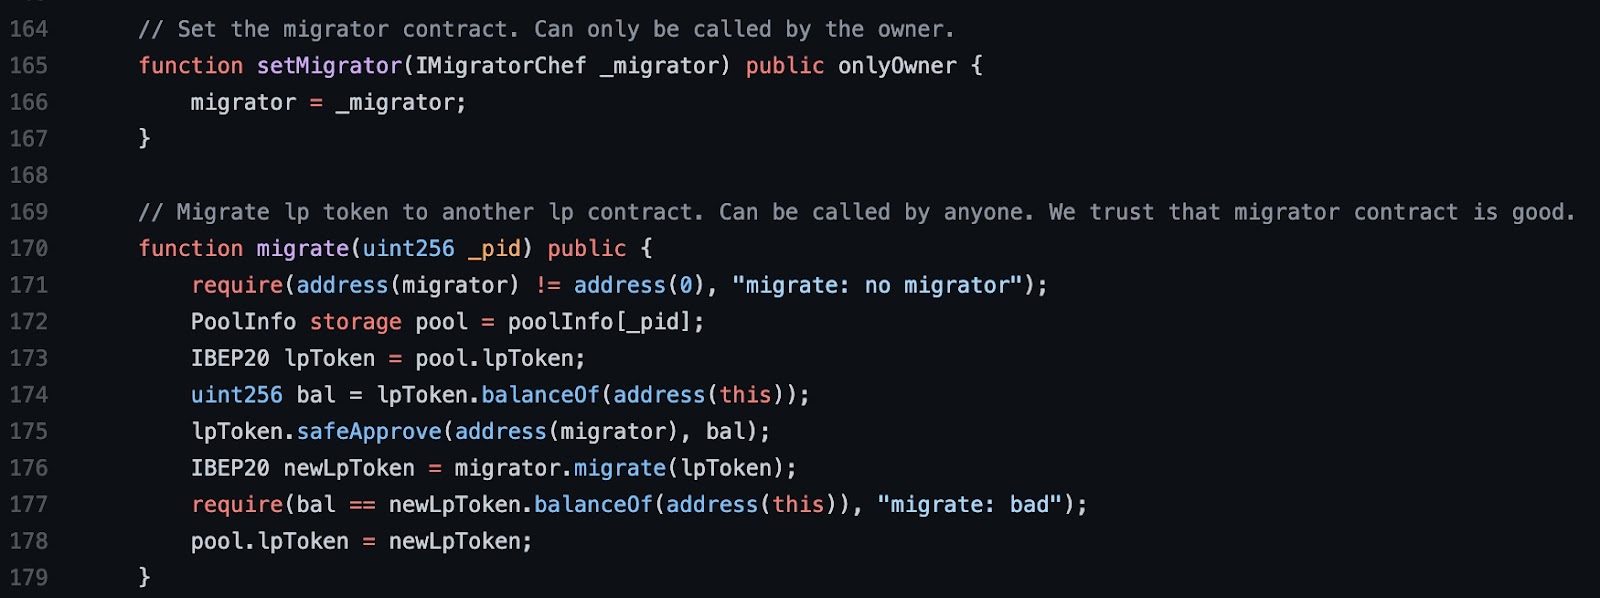 PancakeSwap's migrator code function in their MasterChef contract